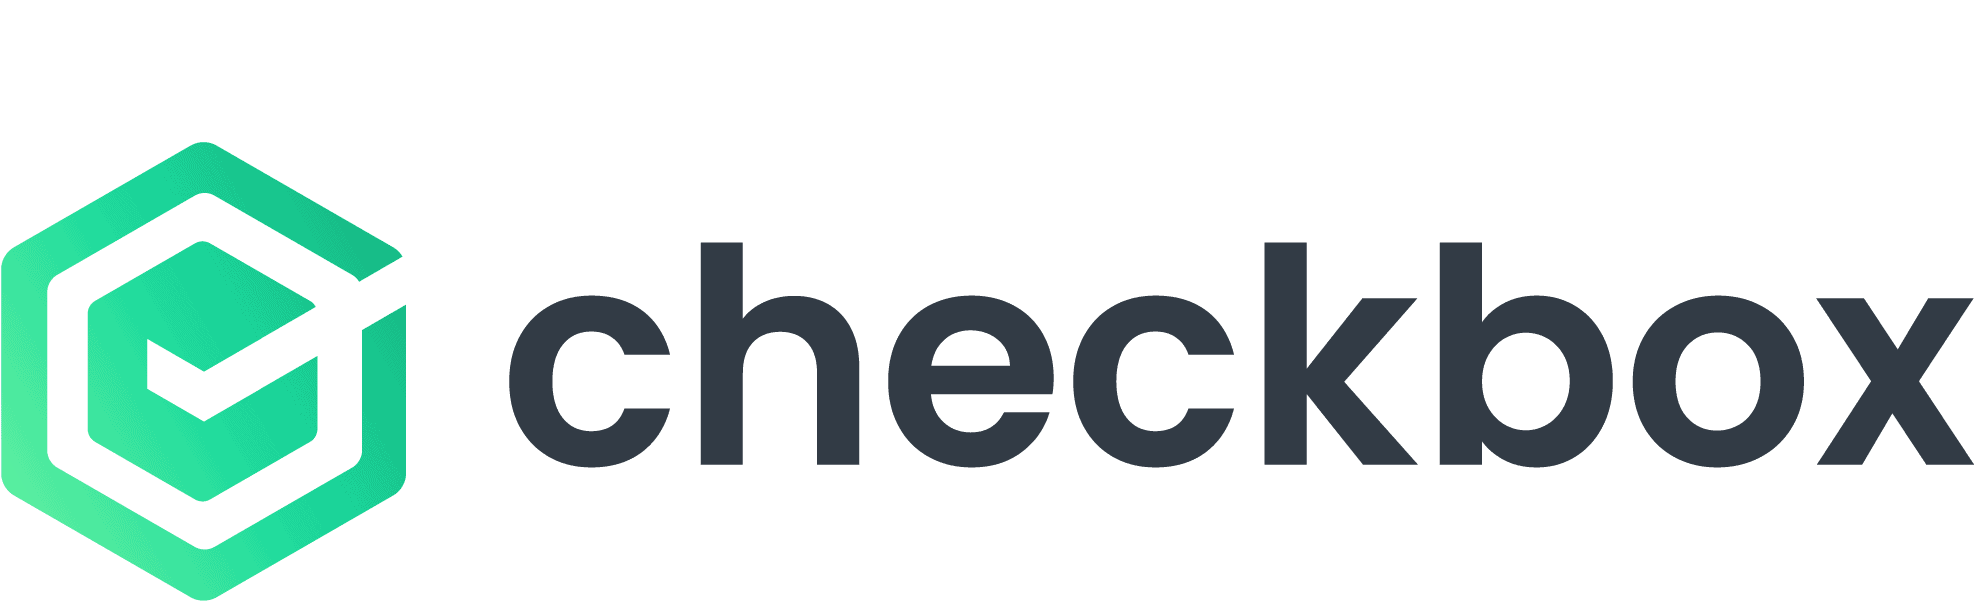 Checkbox logo